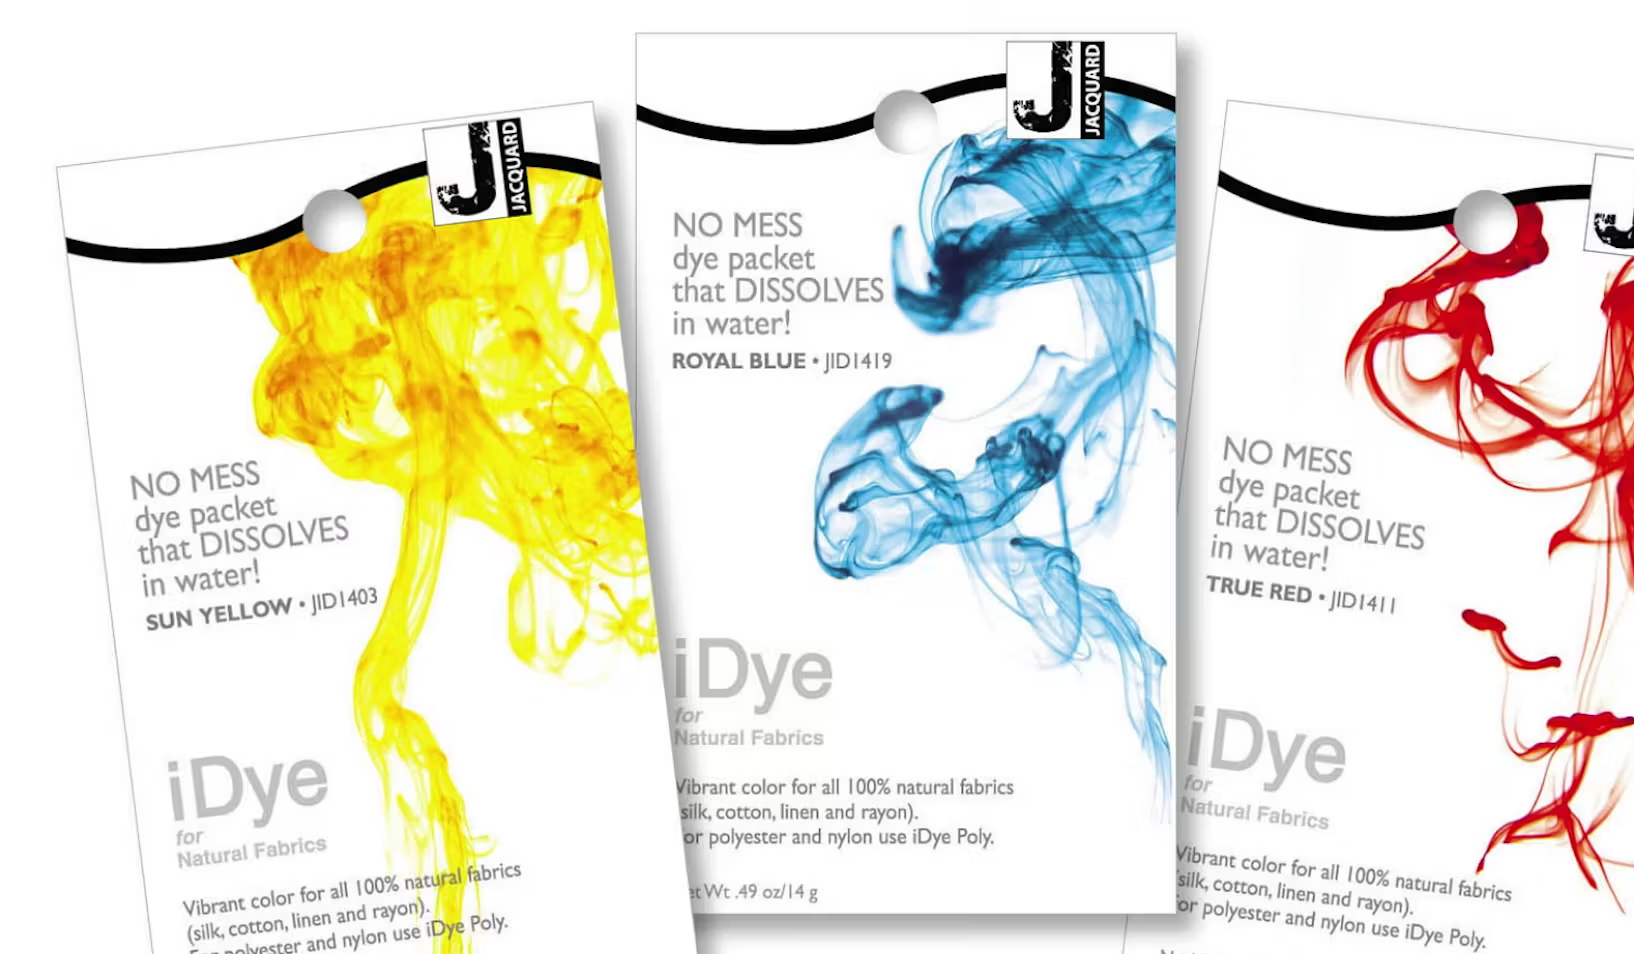 iDye for Natural Fabrics